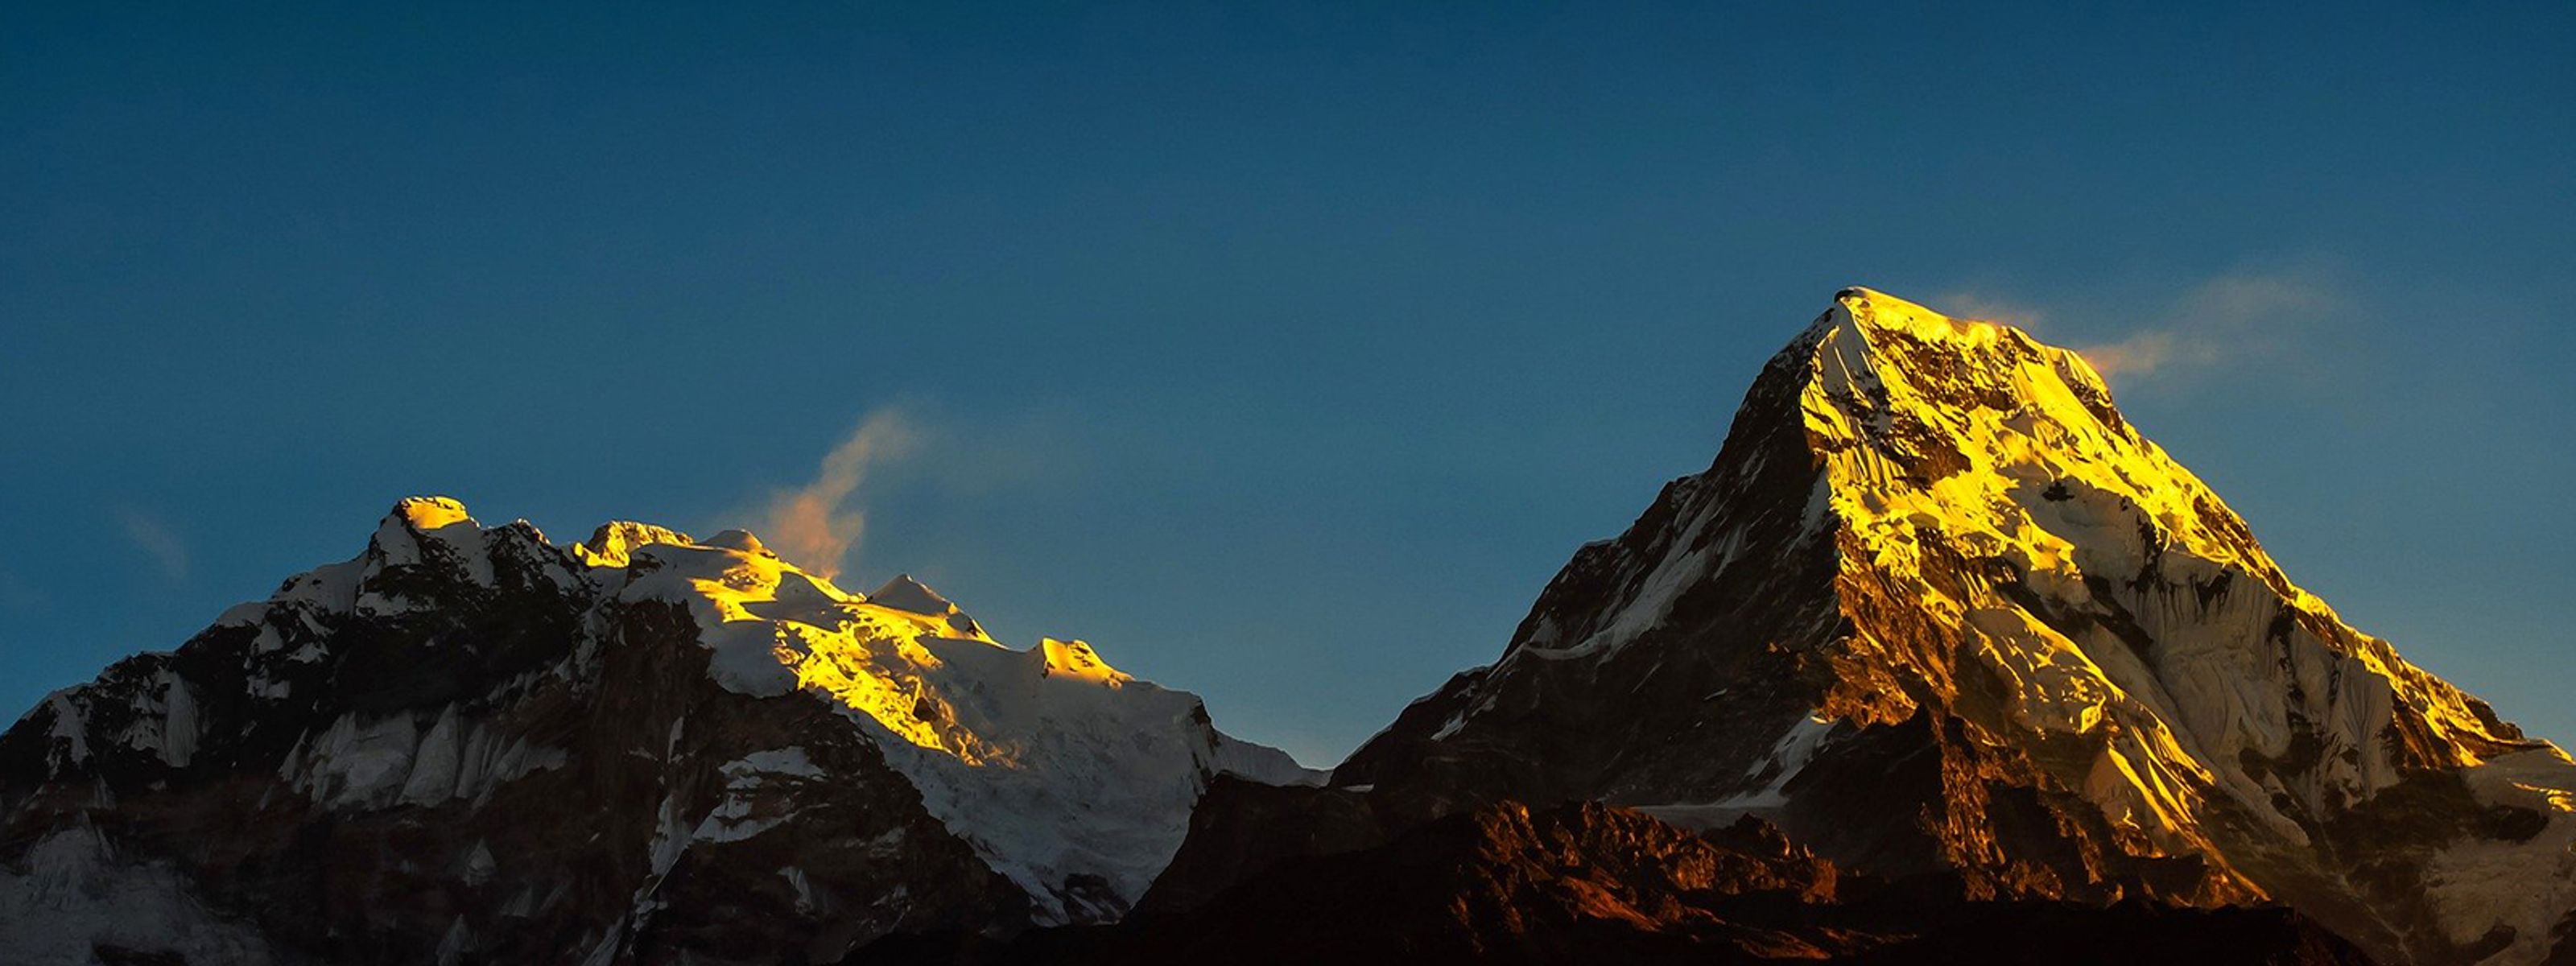 Annapurna-Gebirge im Sonnenuntergang